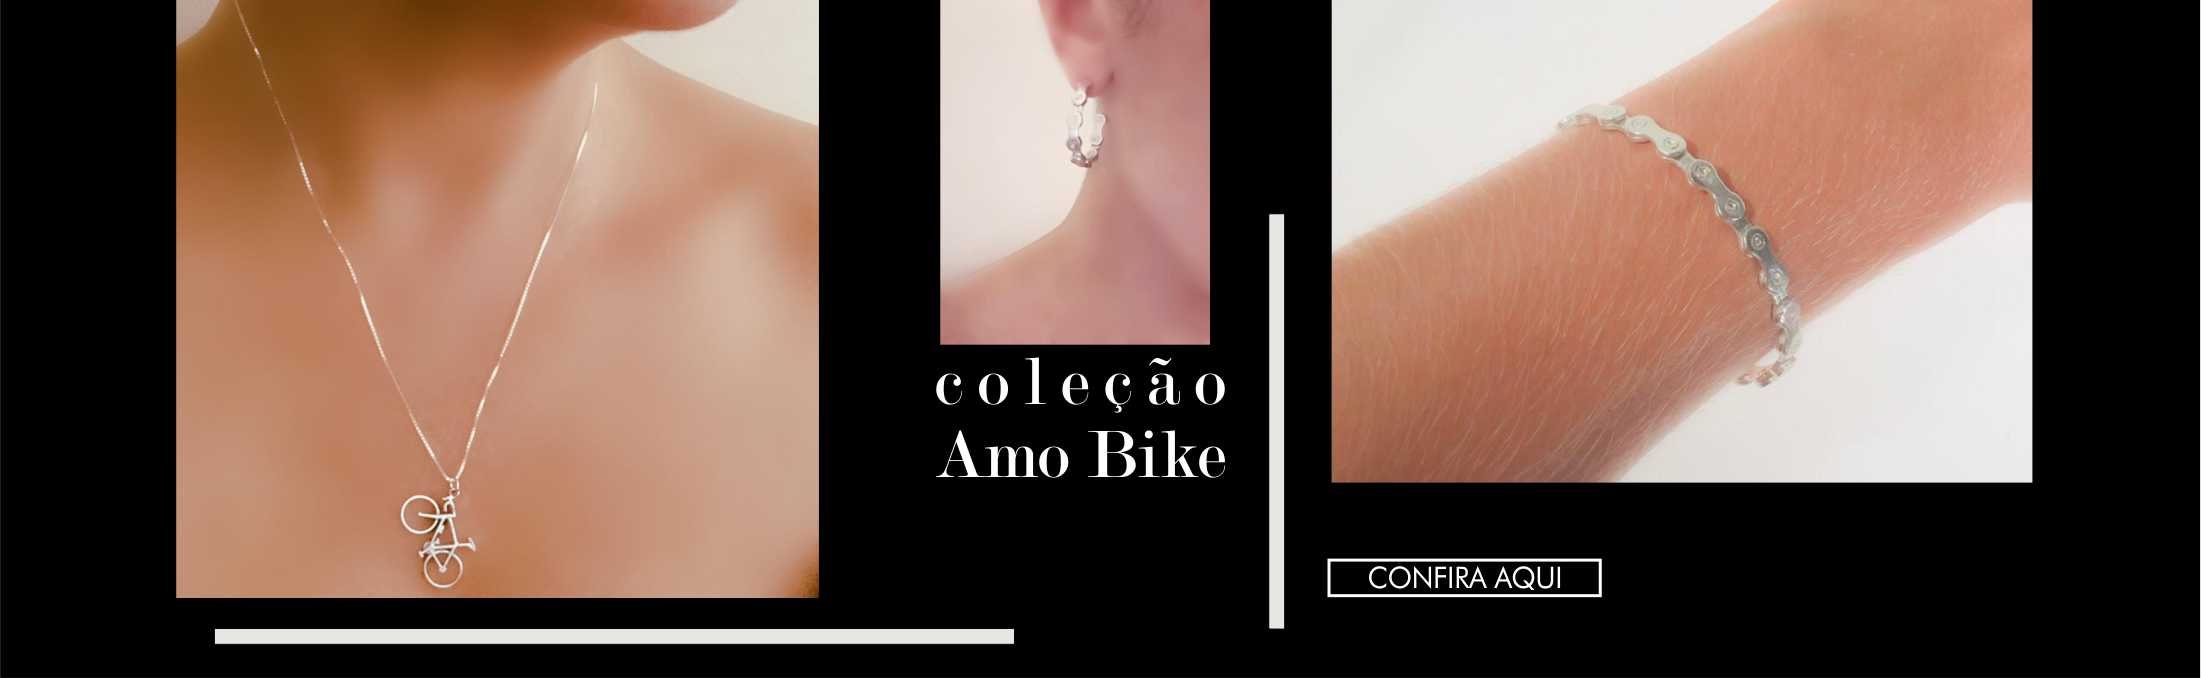 banner-colecao-amo-bike-3-1